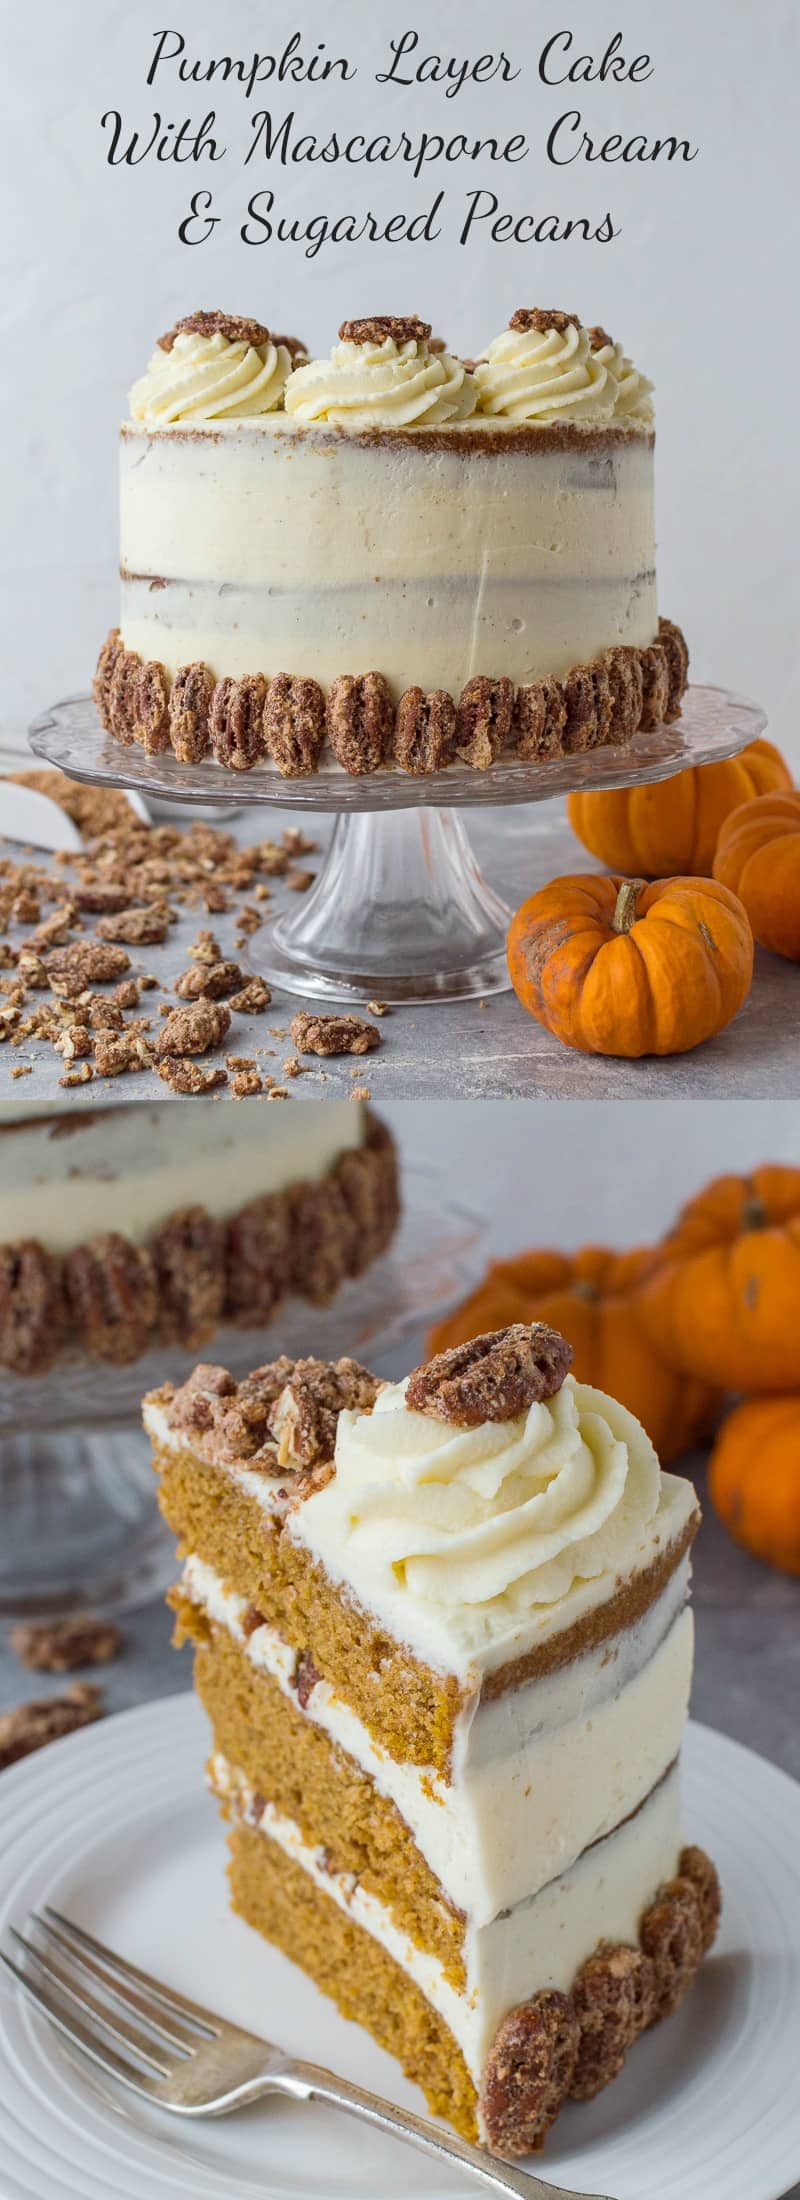 Pumpkin layer cake with mascarpone cream and sugared pecans - utterly irresistible! #pumpkin #cake #pumpkinspice #baking